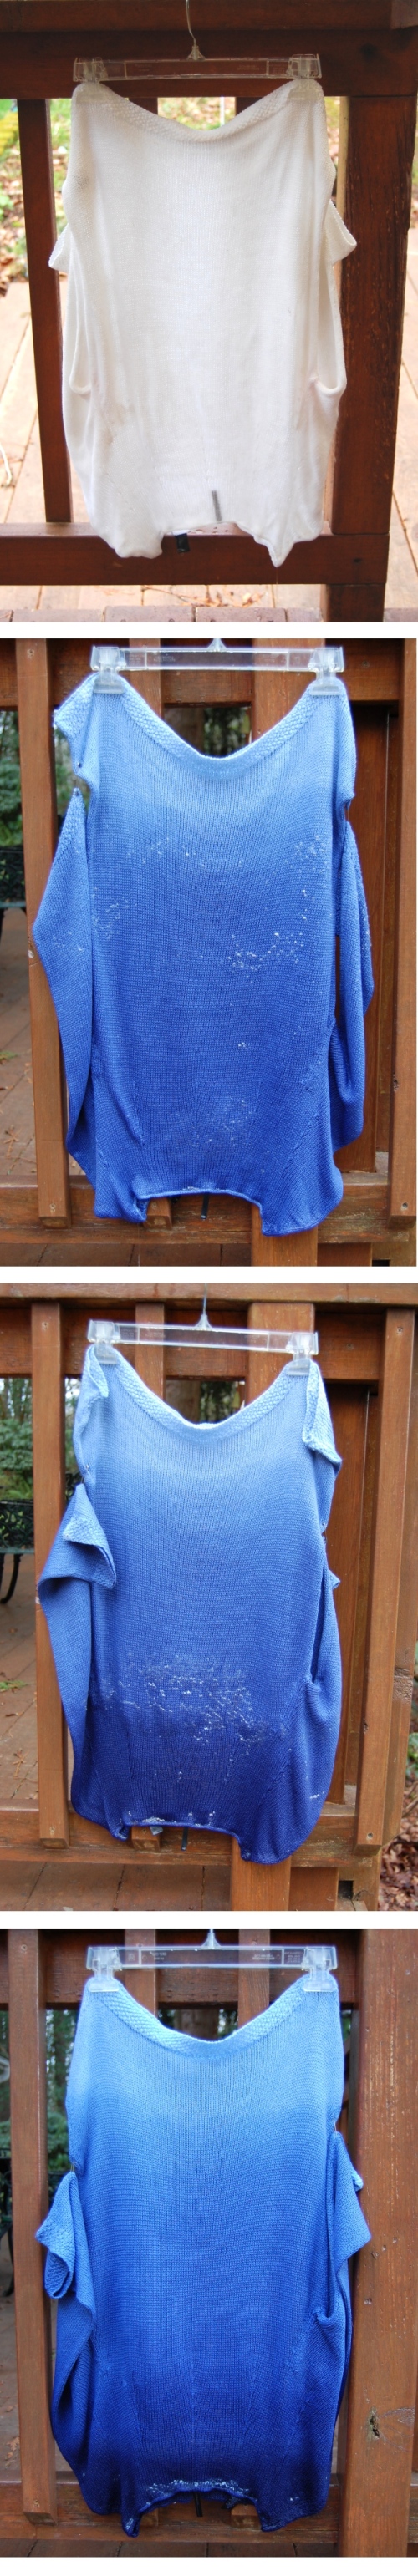 DIY Dip-Dye sweater tutorial